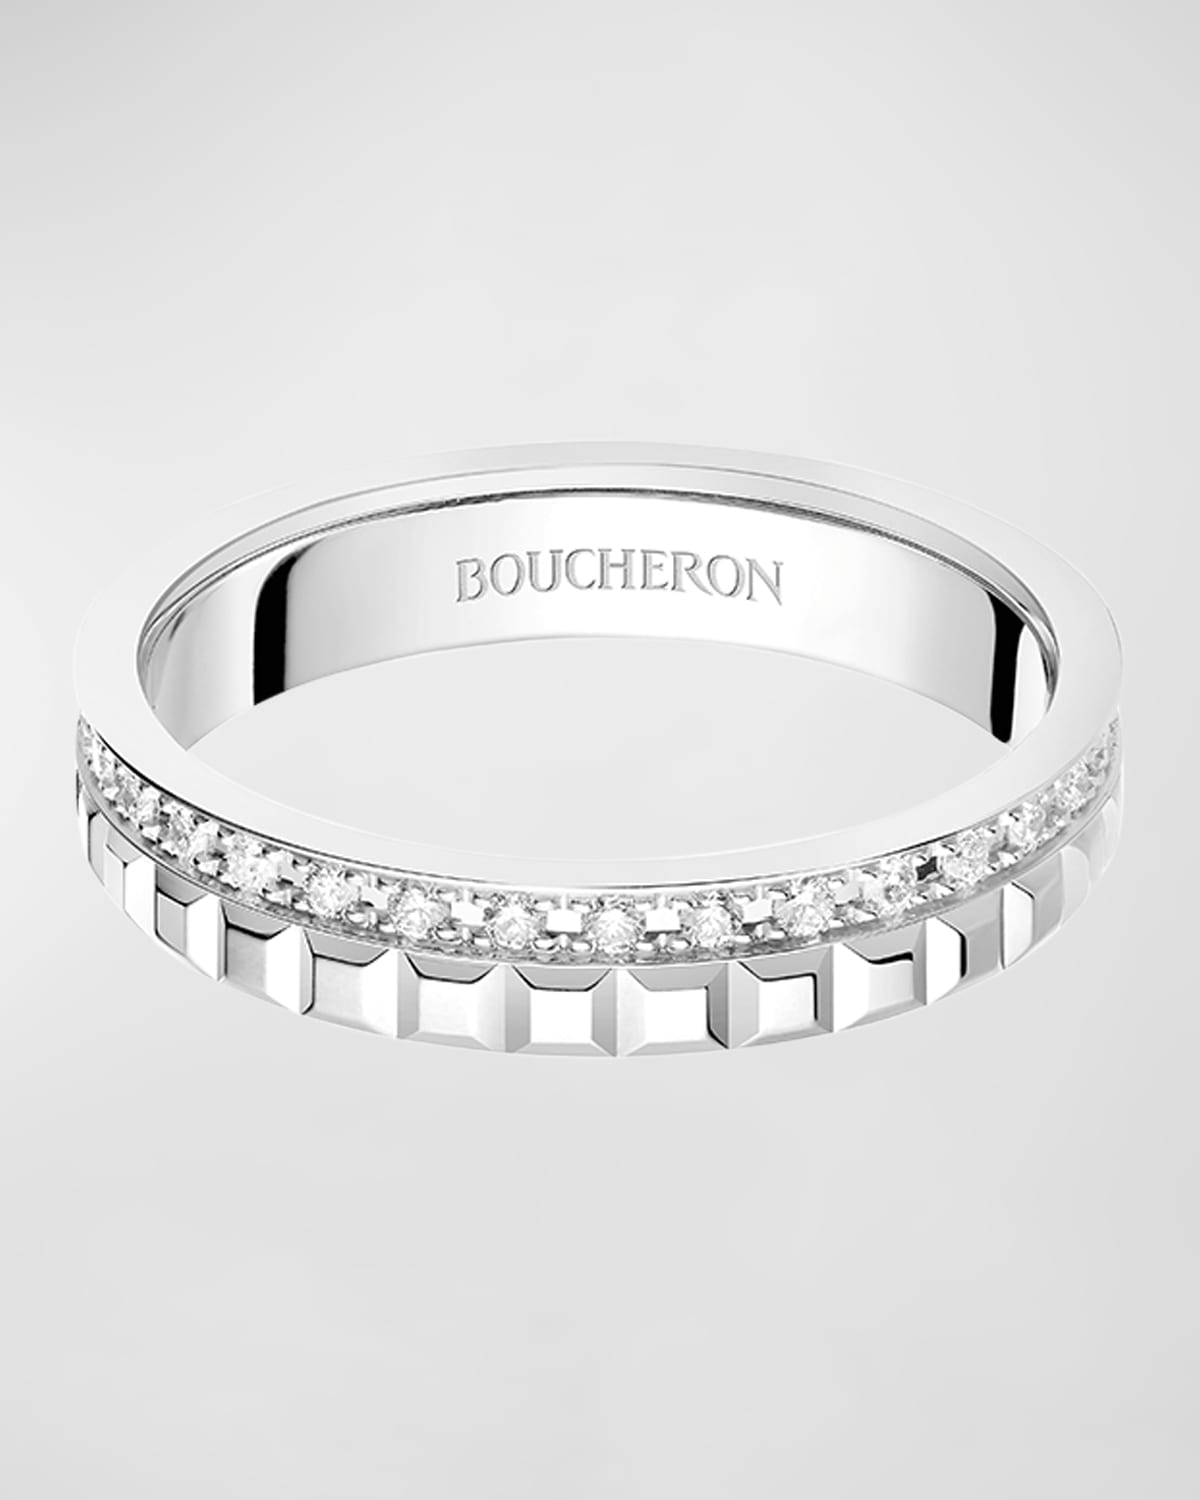 Boucheron White Gold Quatre Diamond Ring, Size 61